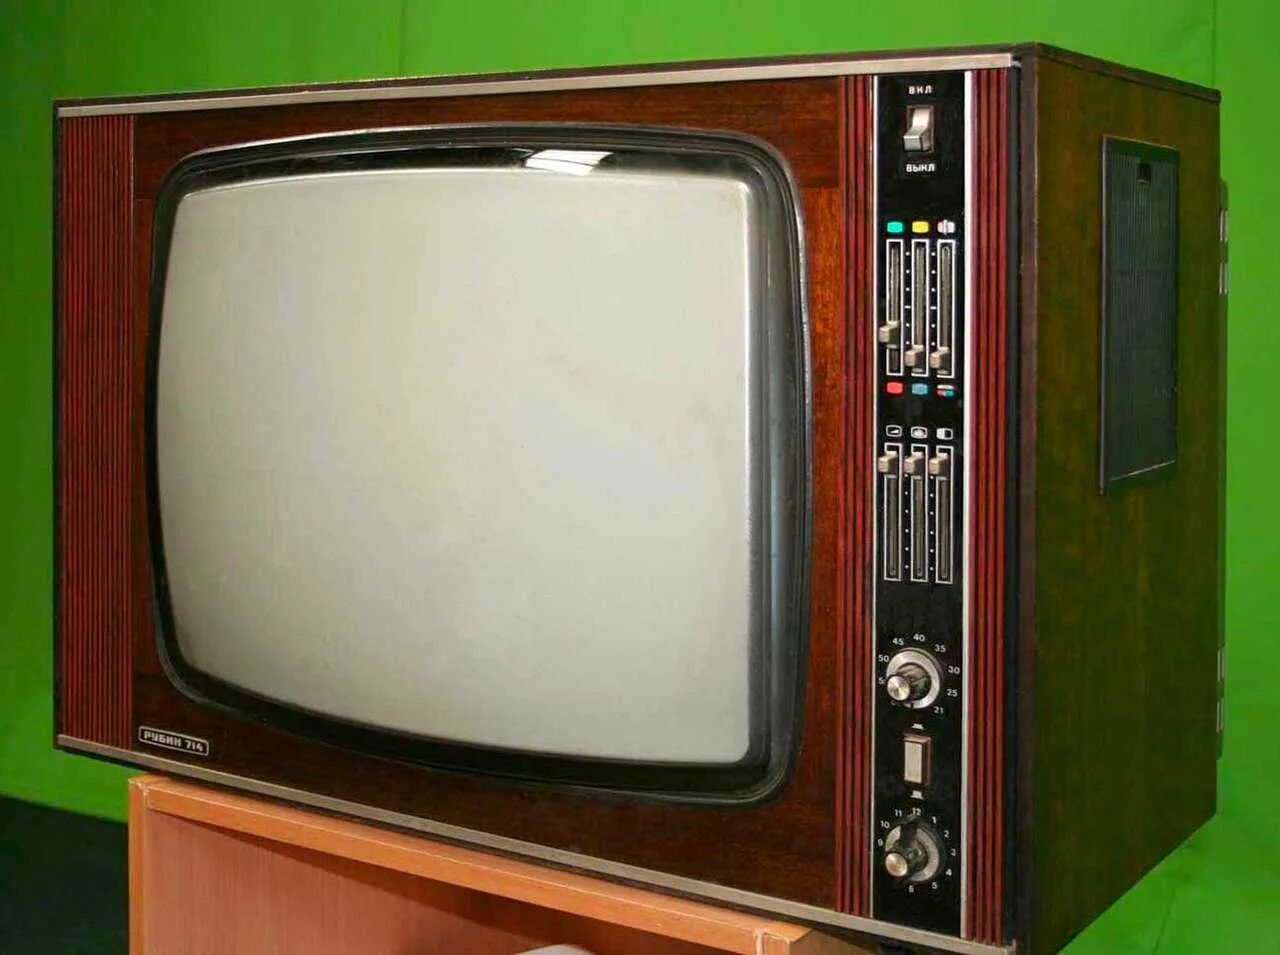 Телевизор Рубин 714. Телевизор Рубин СССР 714. Цветной телевизор Рубин 714. Ламповый телевизор Рубин 714.